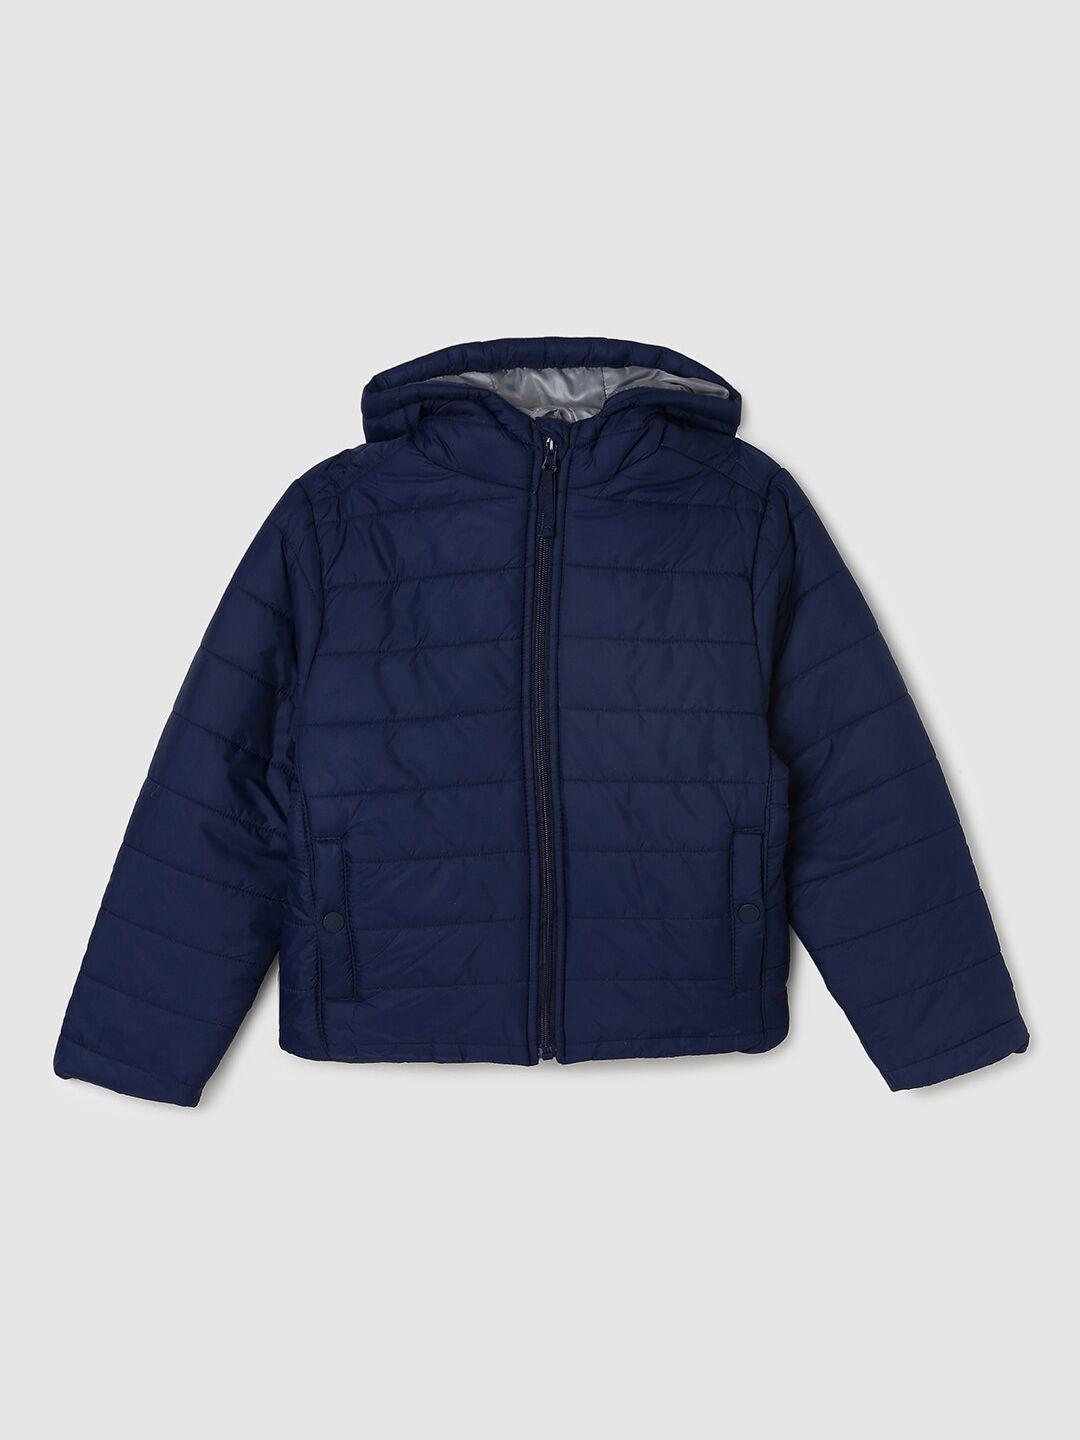 max boys navy blue puffer hooded jacket